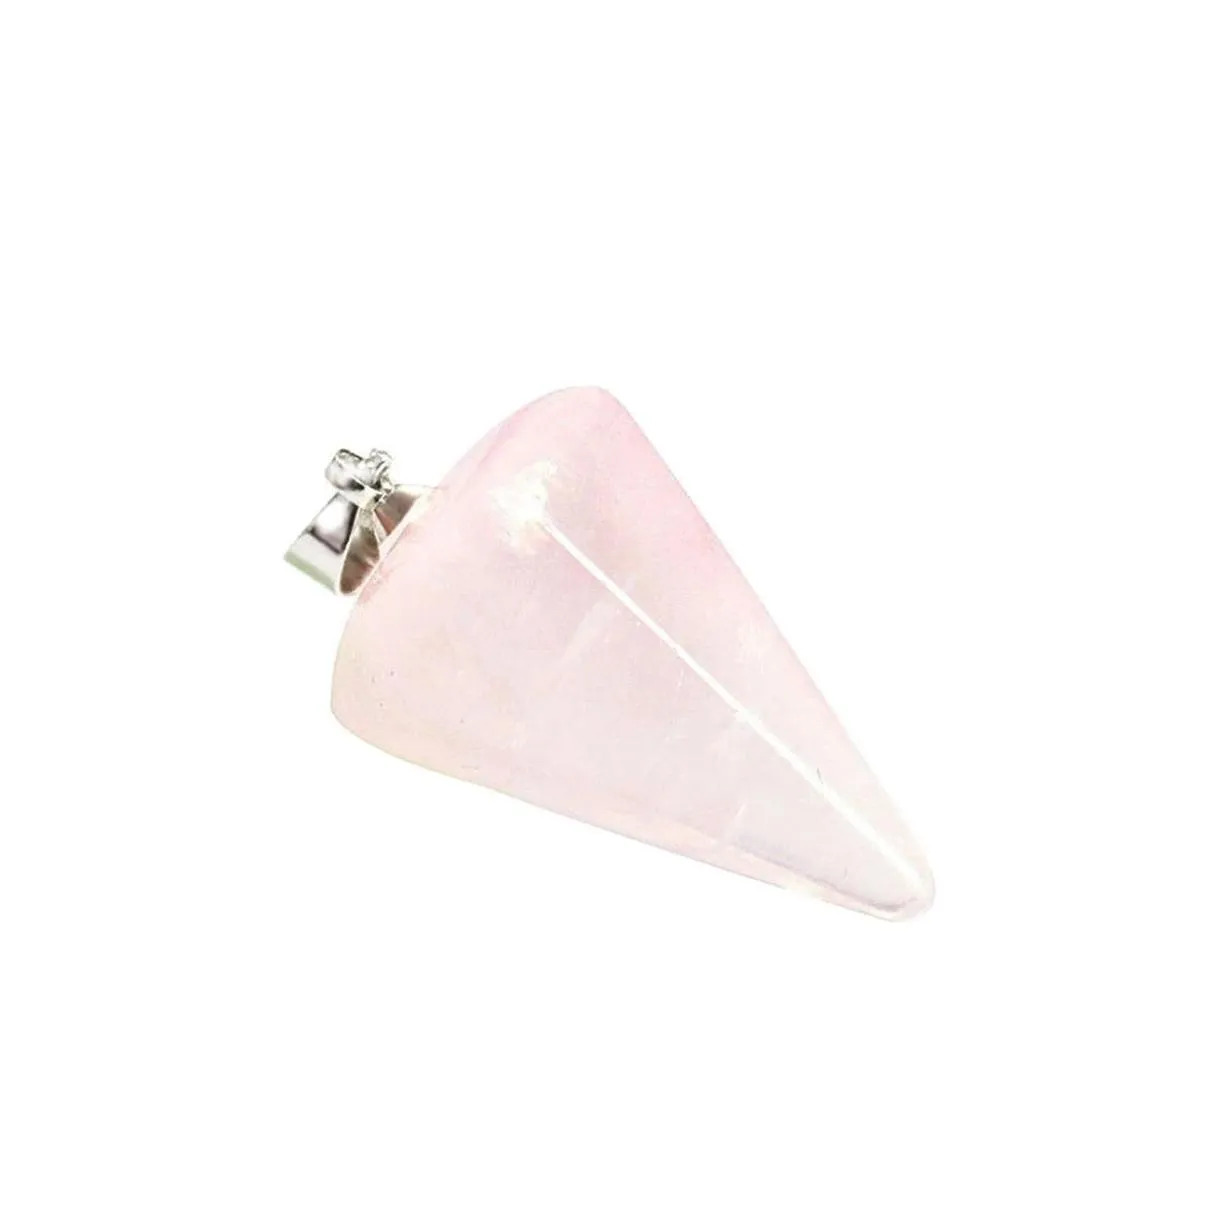 Wholesale Natural Gemstone Rose Quartz Pendant Heart Shell Mushroom Charm Jewelry Pendant Women Men Gift